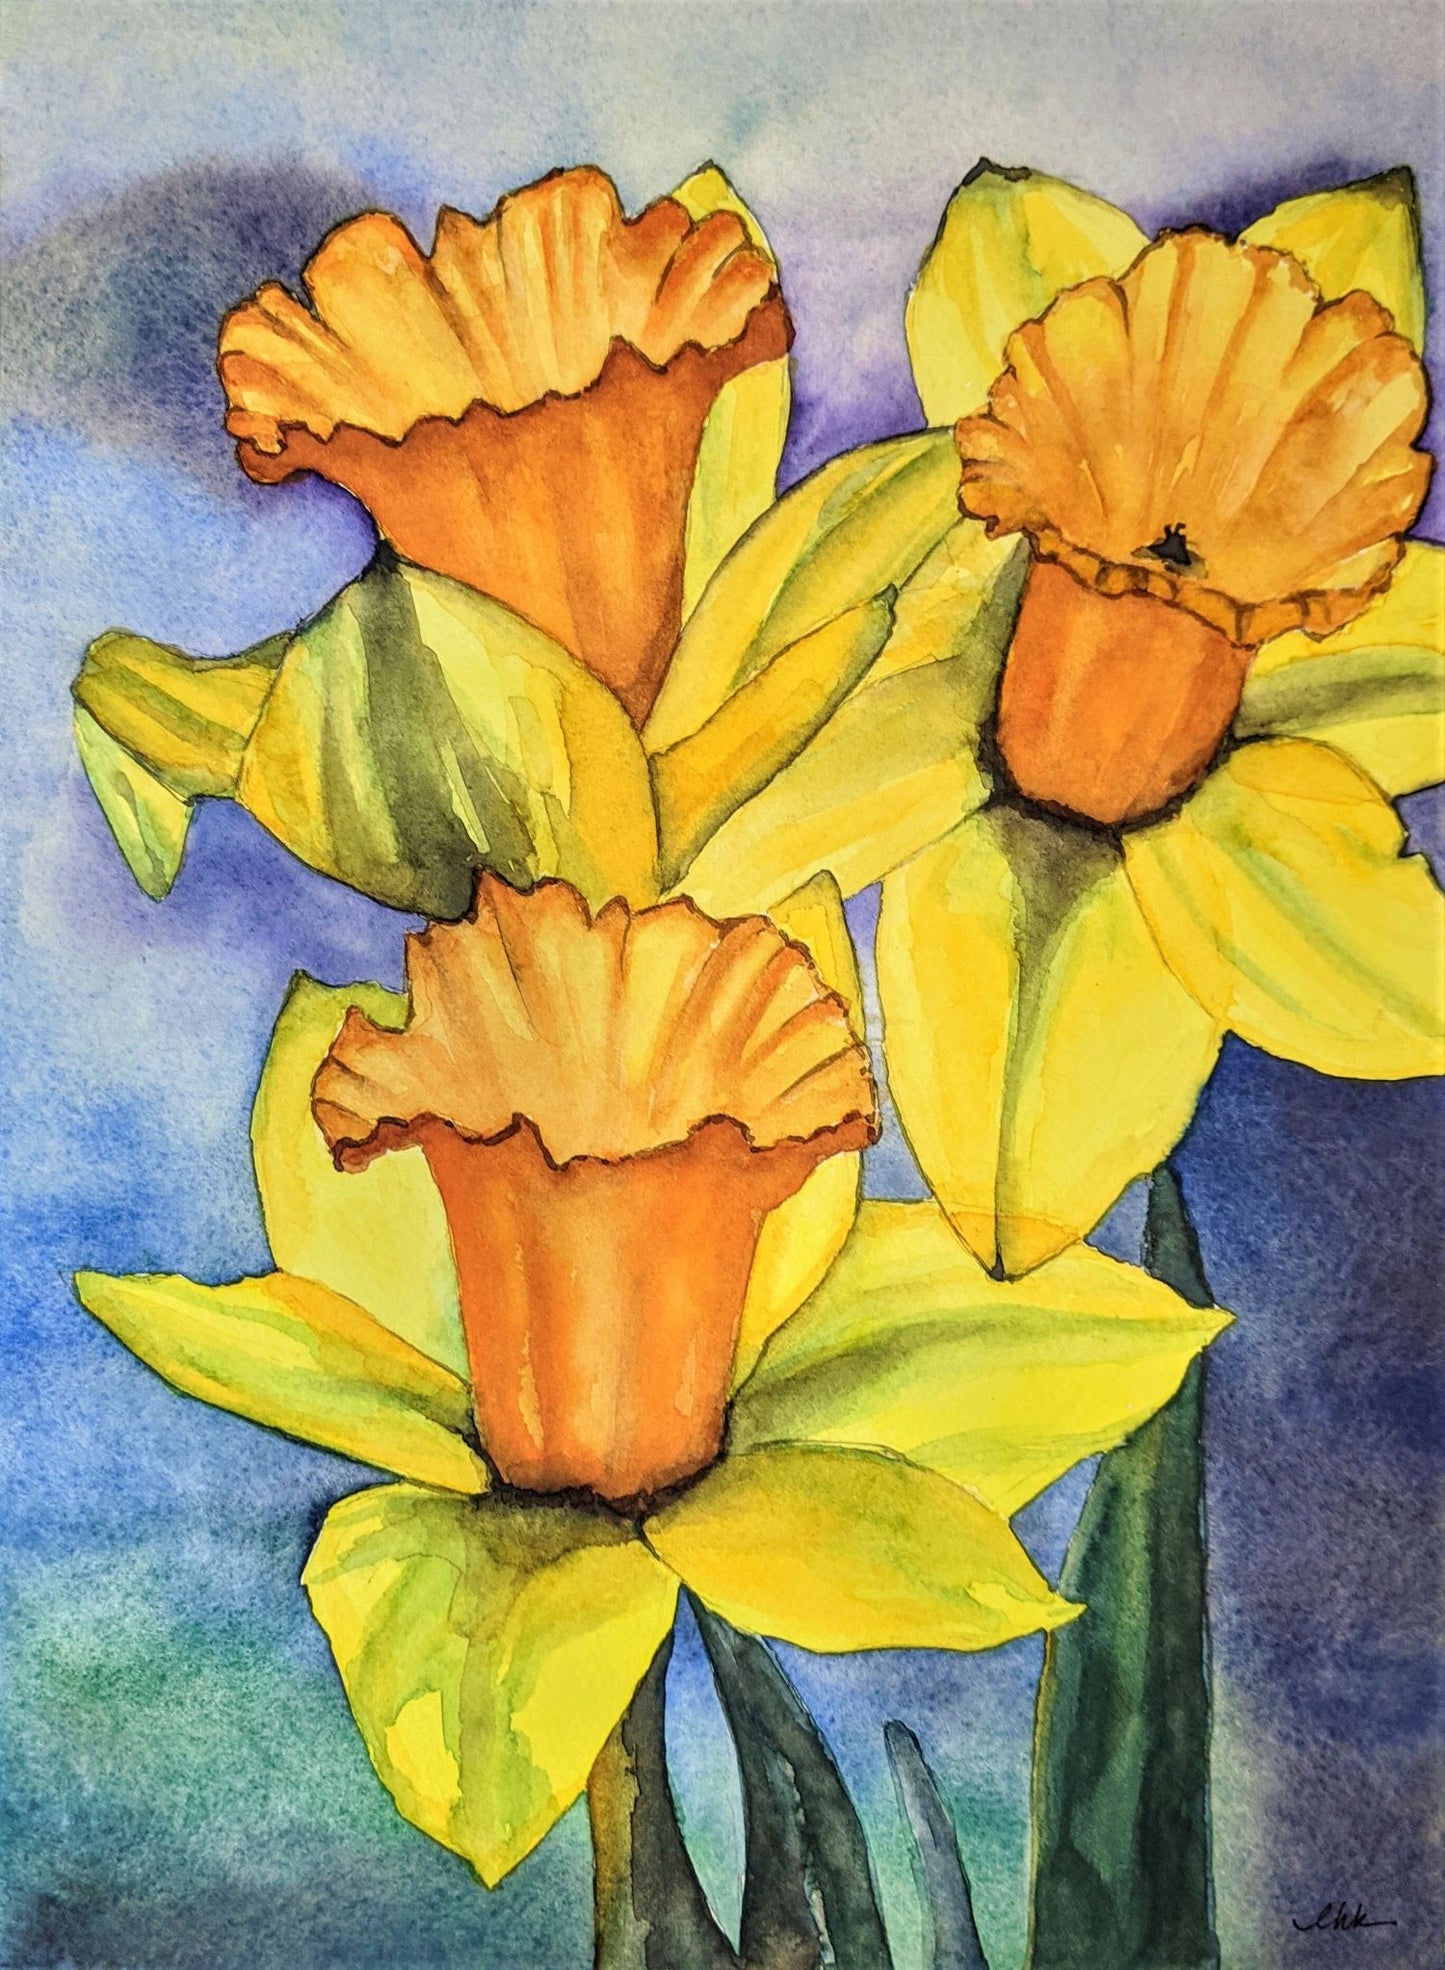 Daffodils at dusk watercolor painting